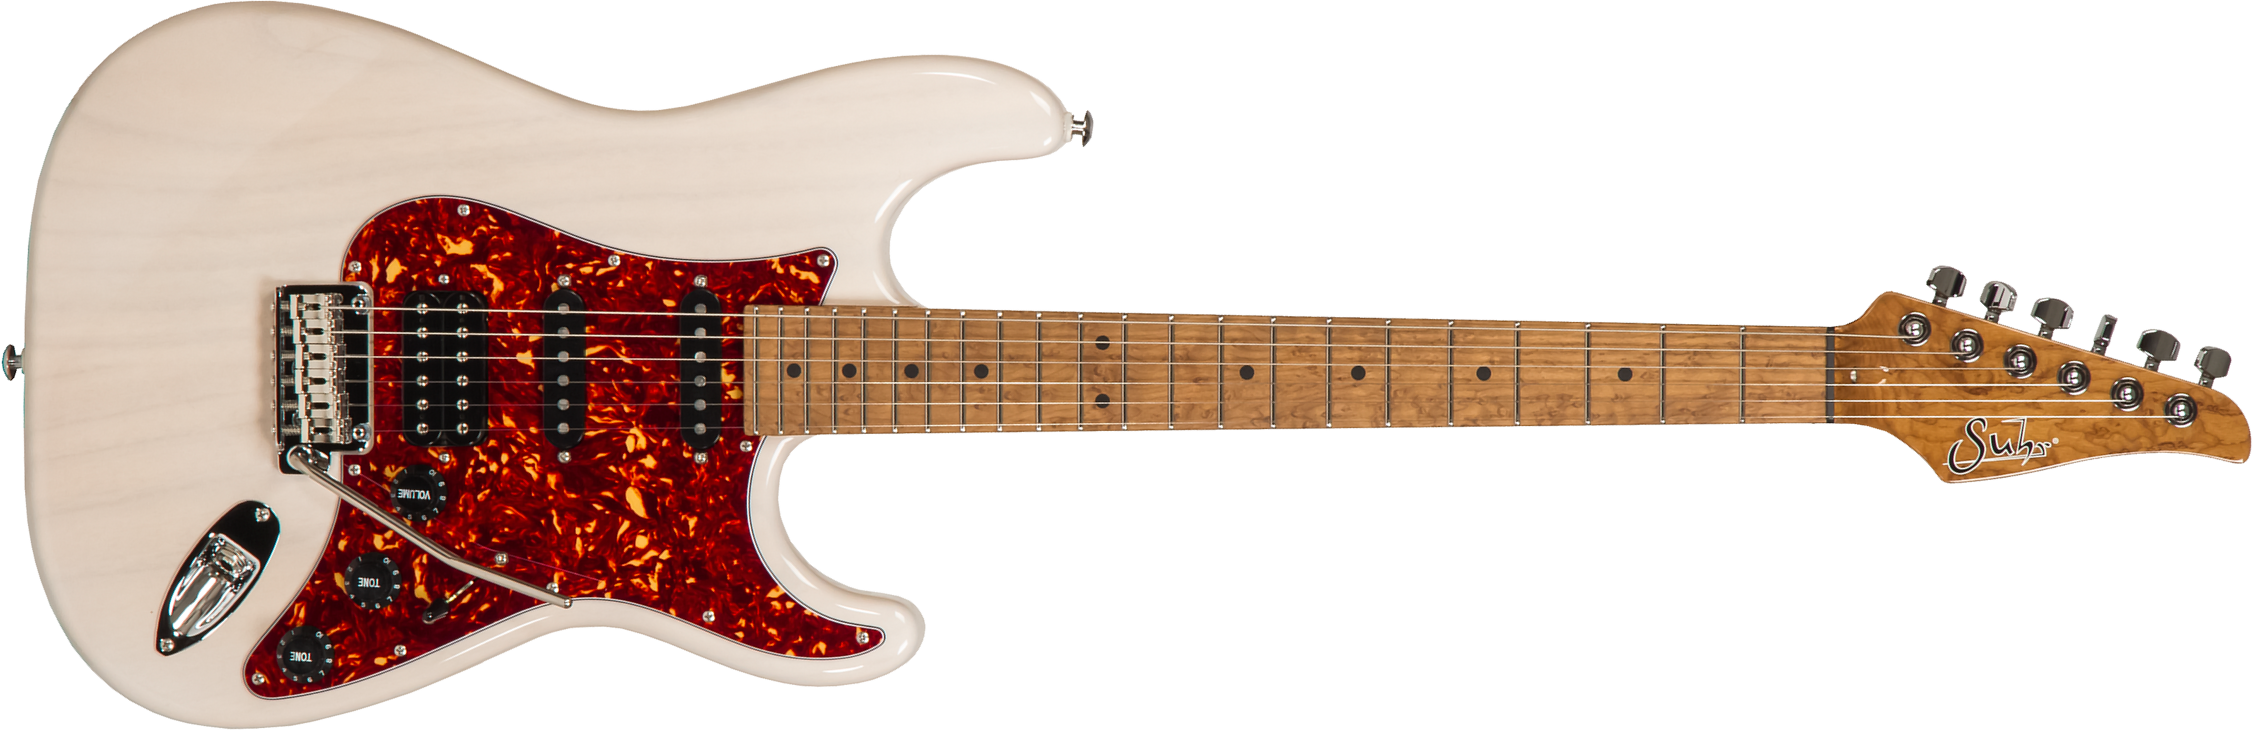 Suhr Classic S Paulownia 01-ltd-0024 Hss Trem Mn - Trans White - Str shape electric guitar - Main picture